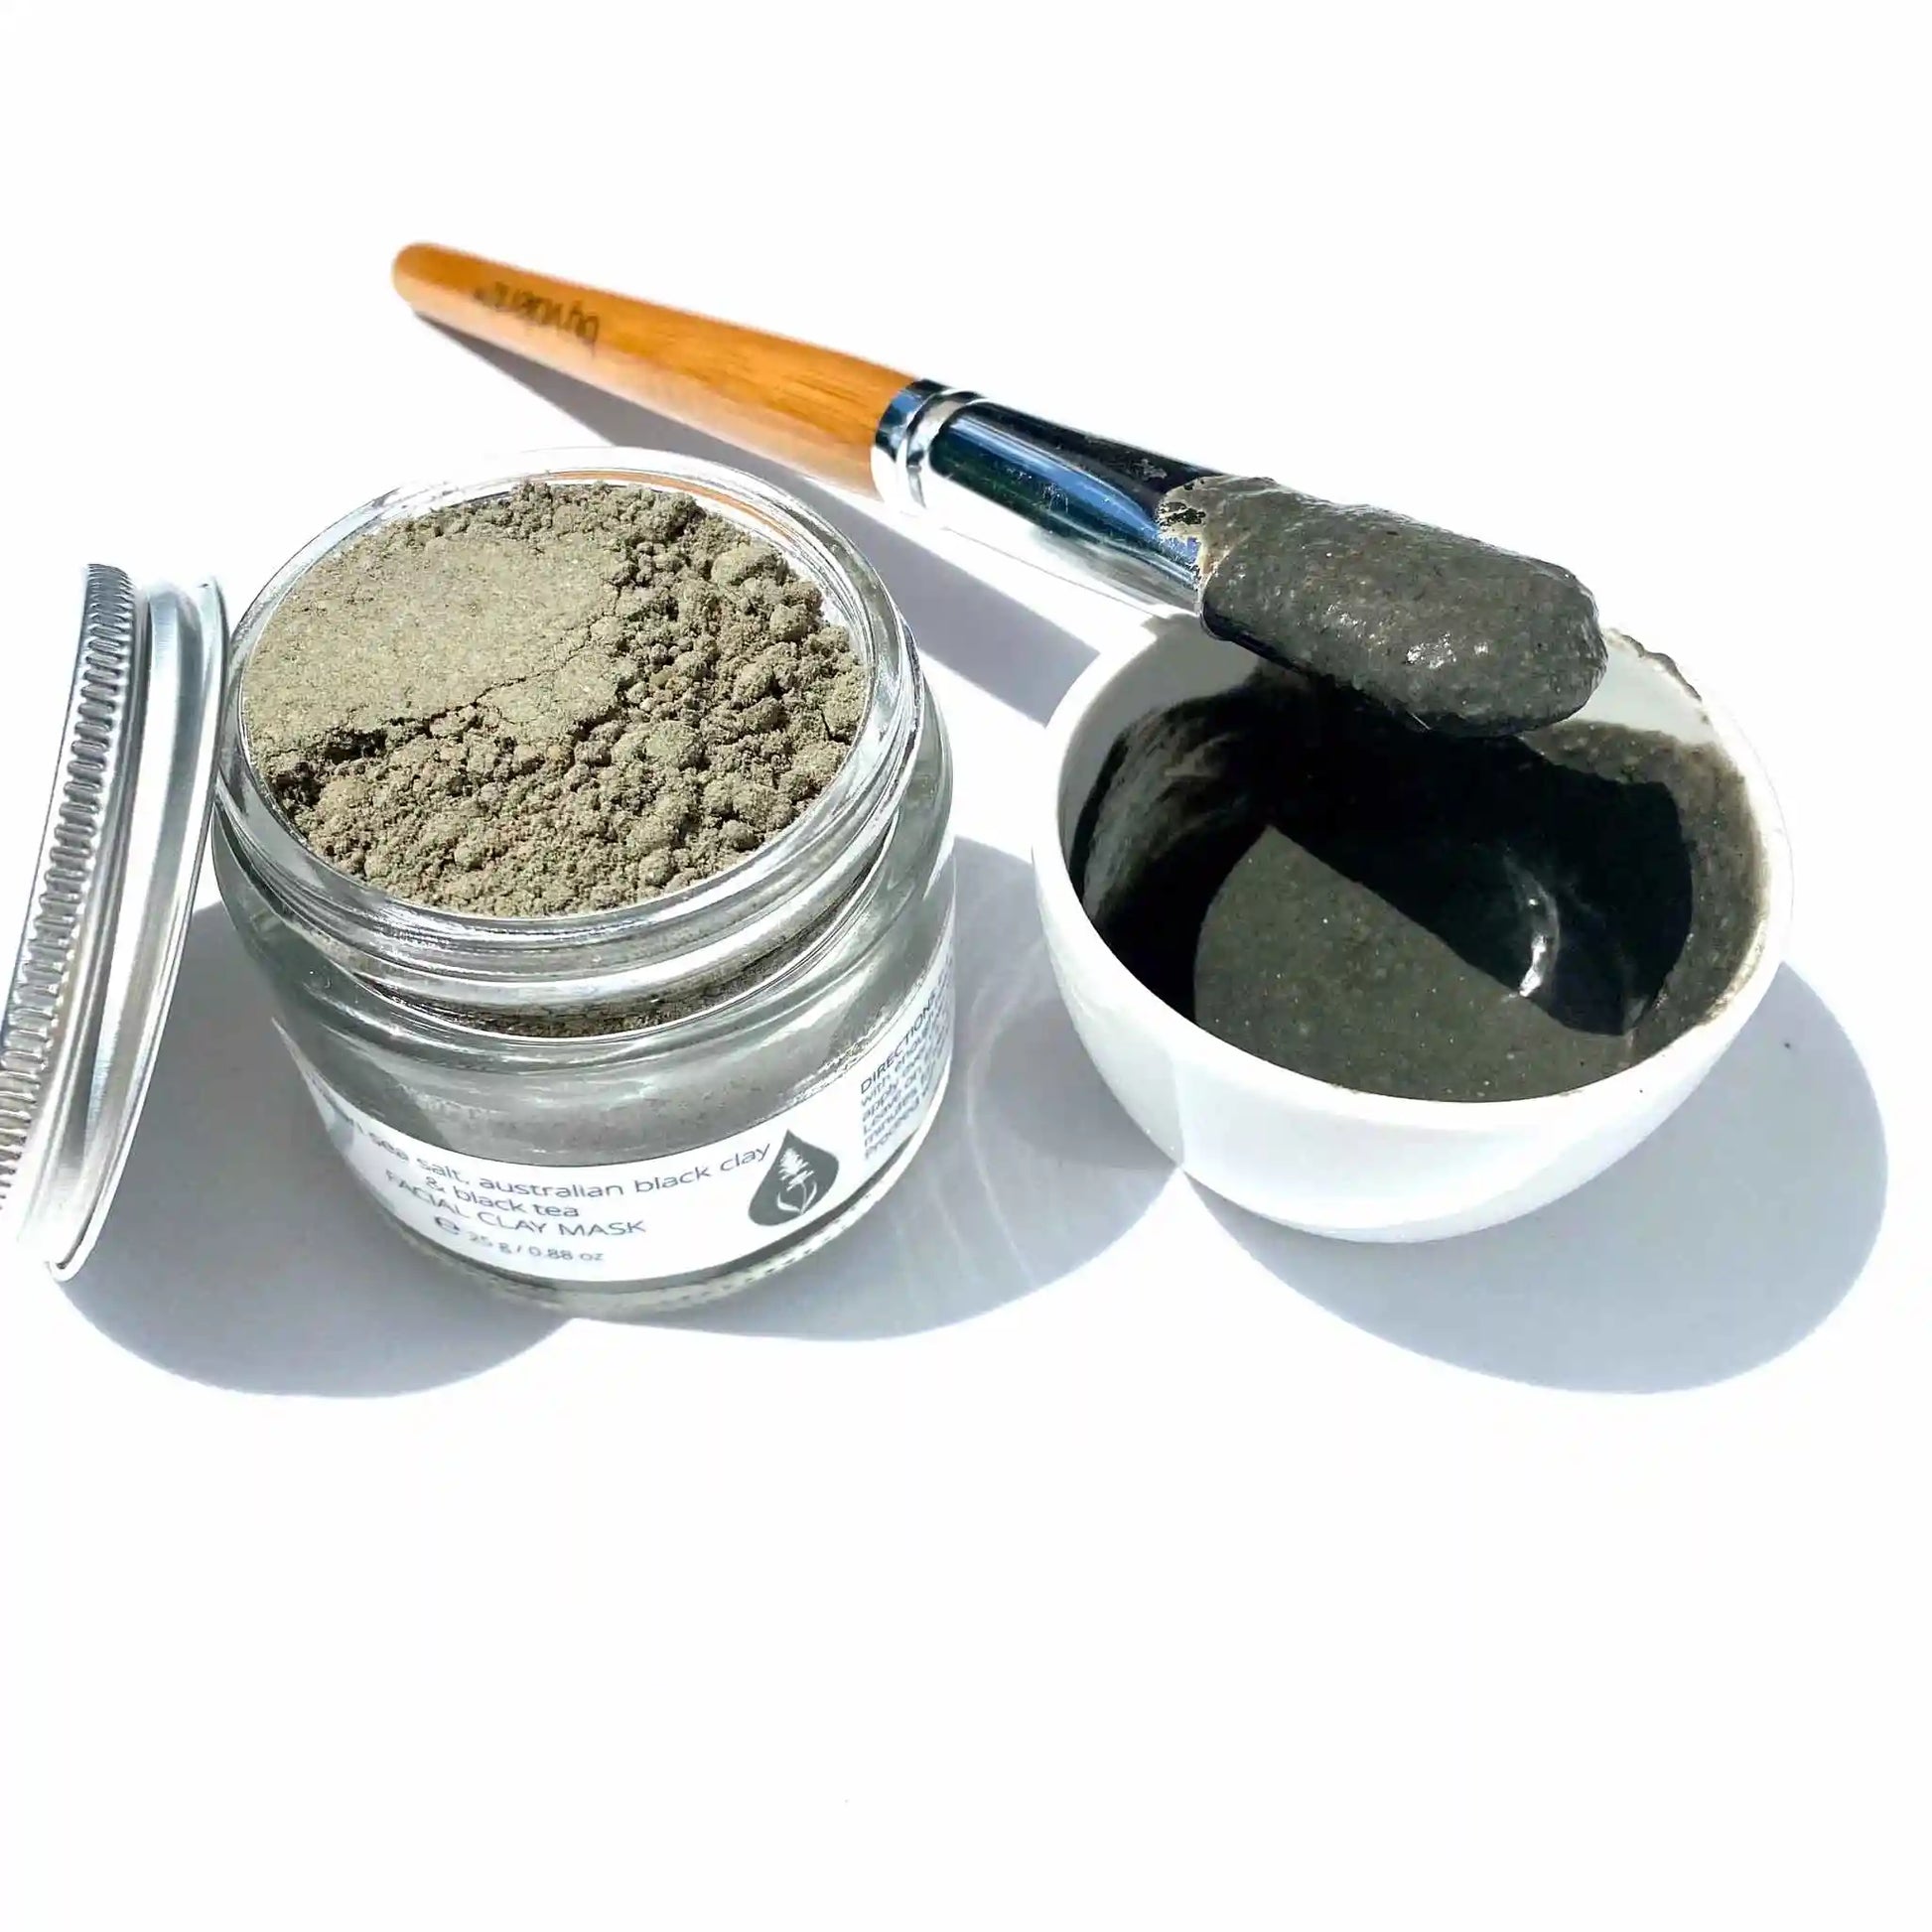 Skin Purifying By Valenti Organics Hawaiian Sea Salt, Australian Black Clay & Black Tea Natural SkincareFacial Clay Mask